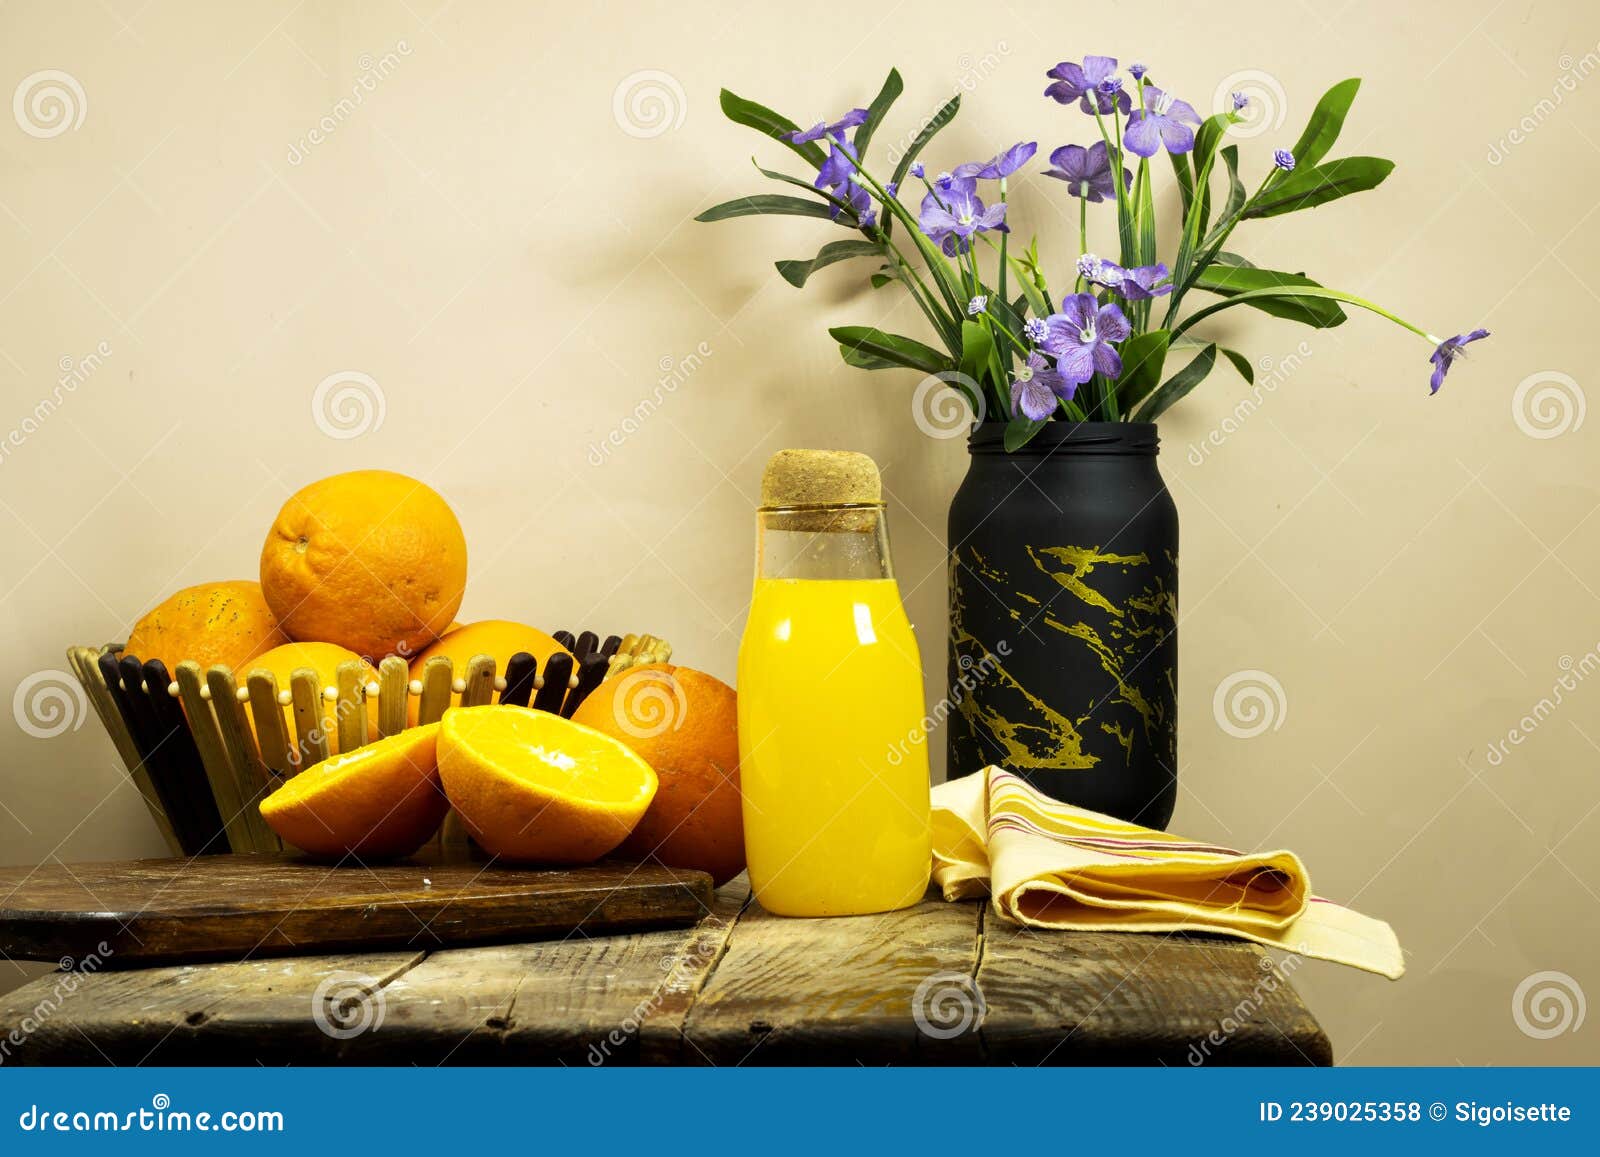 https://thumbs.dreamstime.com/z/glass-bottle-fresh-orange-juice-fresh-fruits-flowers-vase-wooden-planks-table-glass-bottle-fresh-orange-juice-239025358.jpg